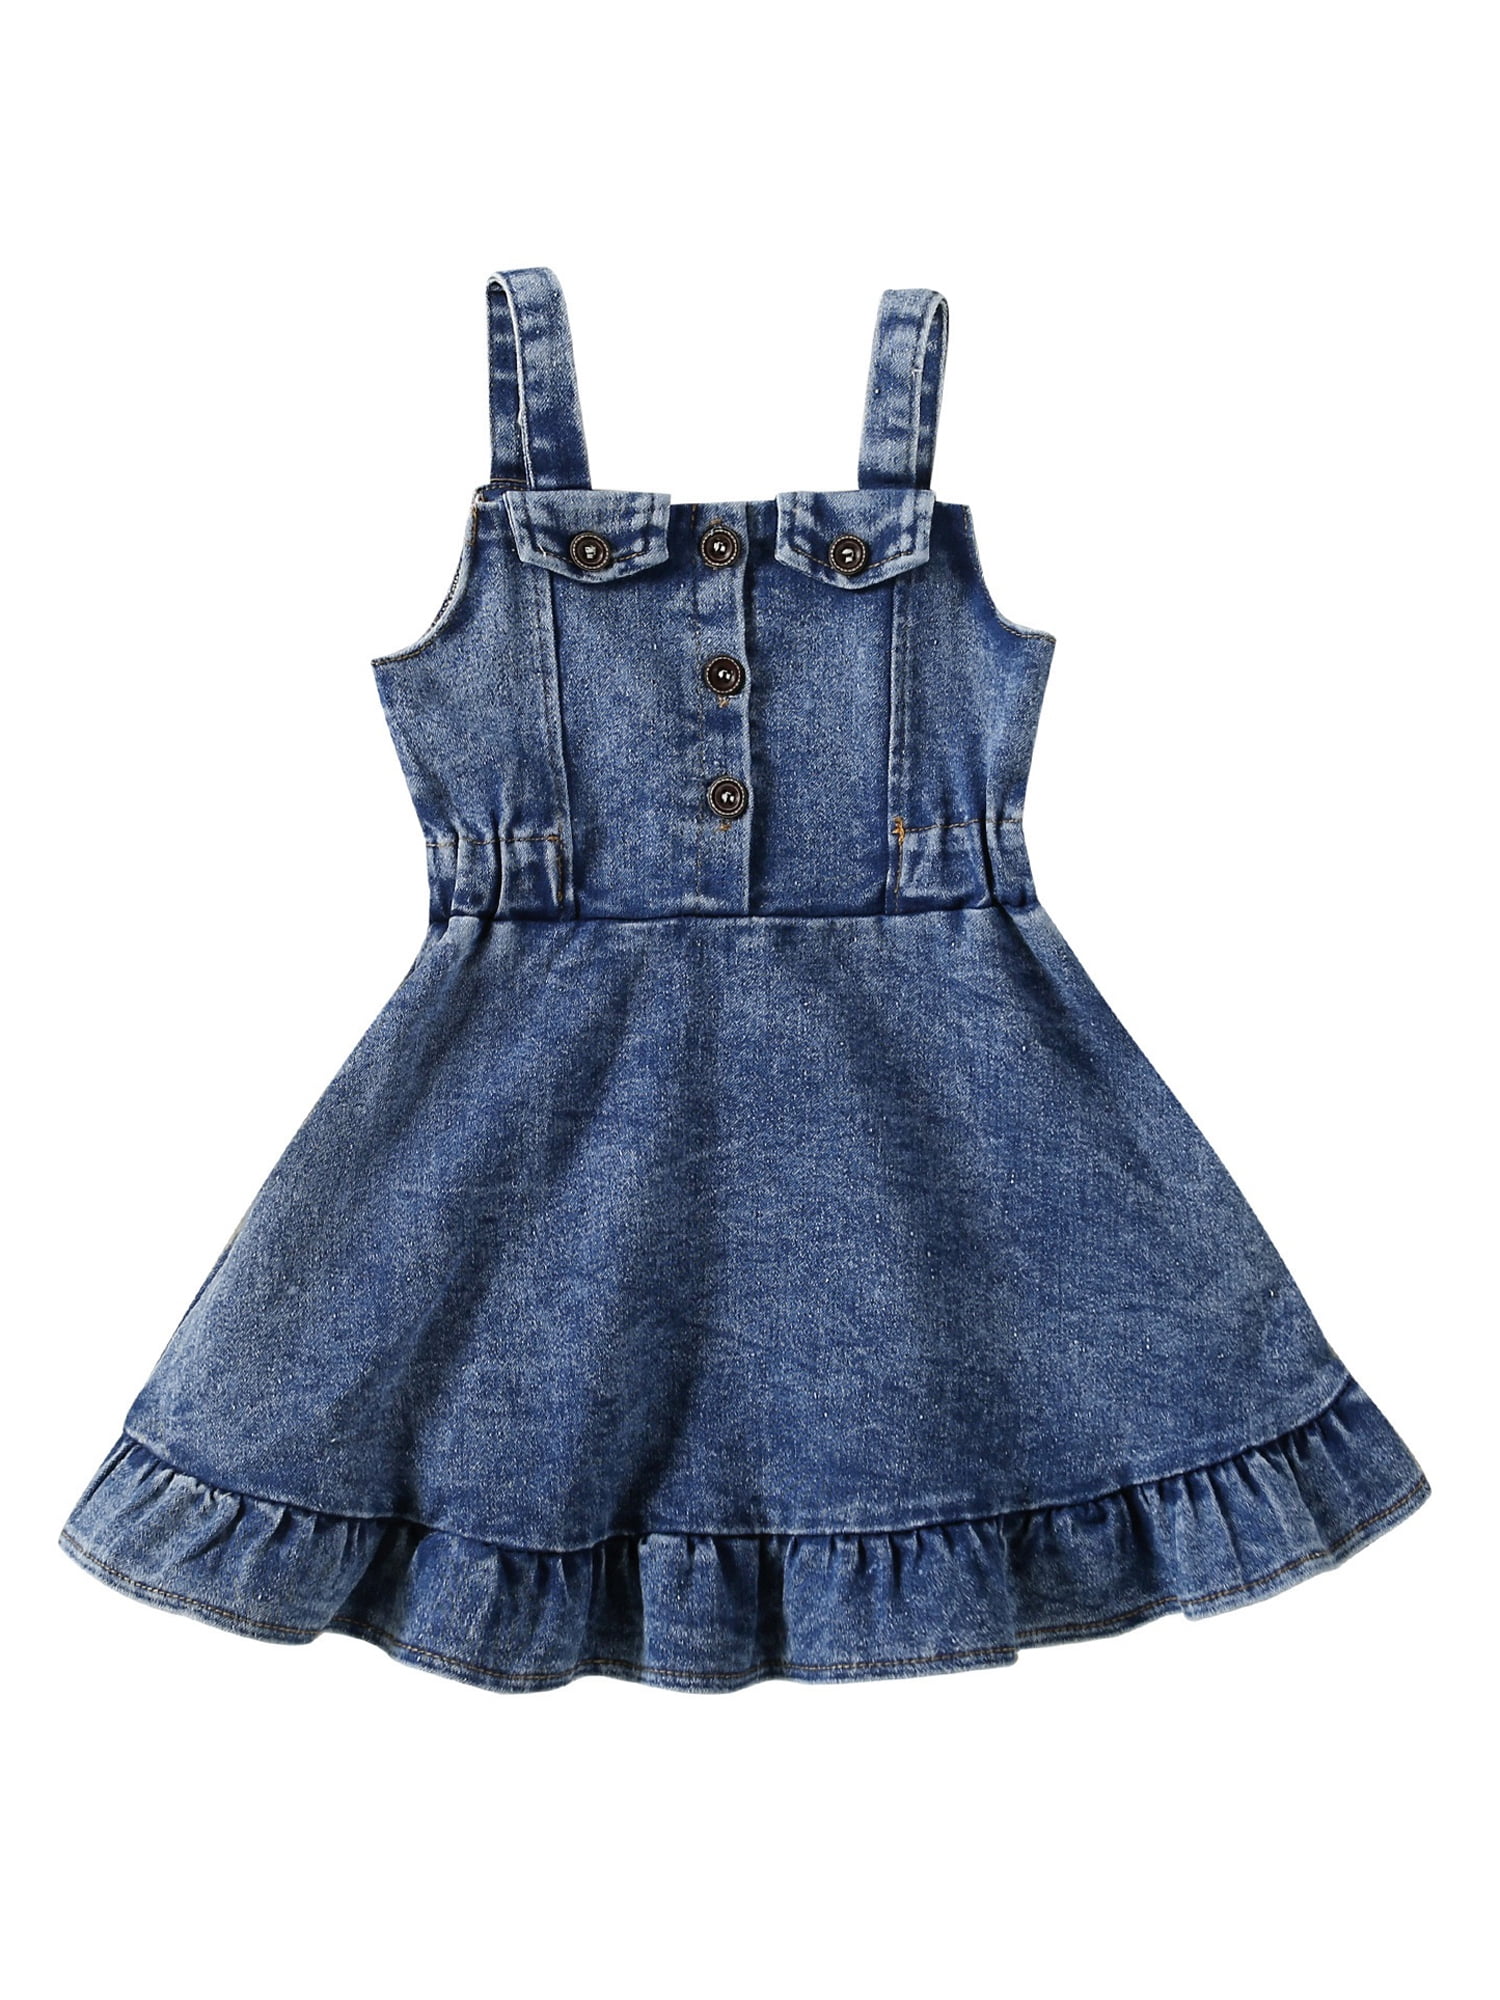 Sleeveless denim dress - Denim blue - Kids | H&M IN